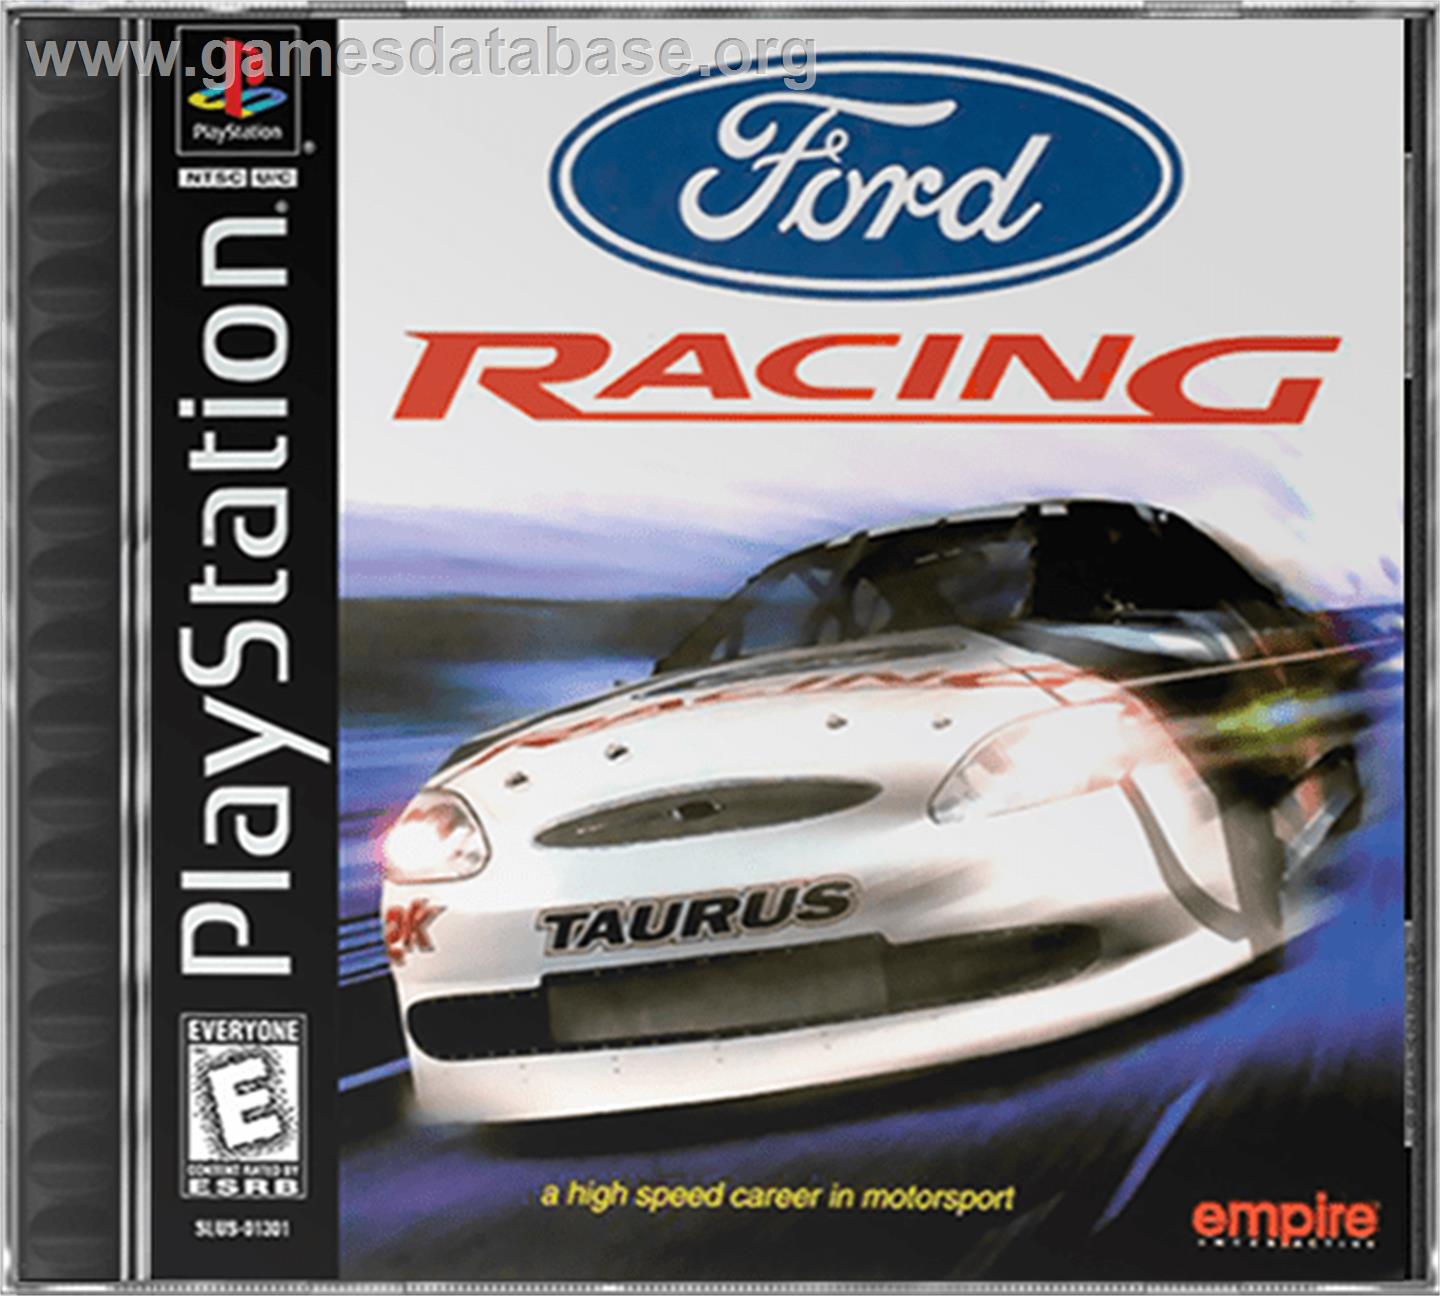 Ford Racing - Sony Playstation - Artwork - Box